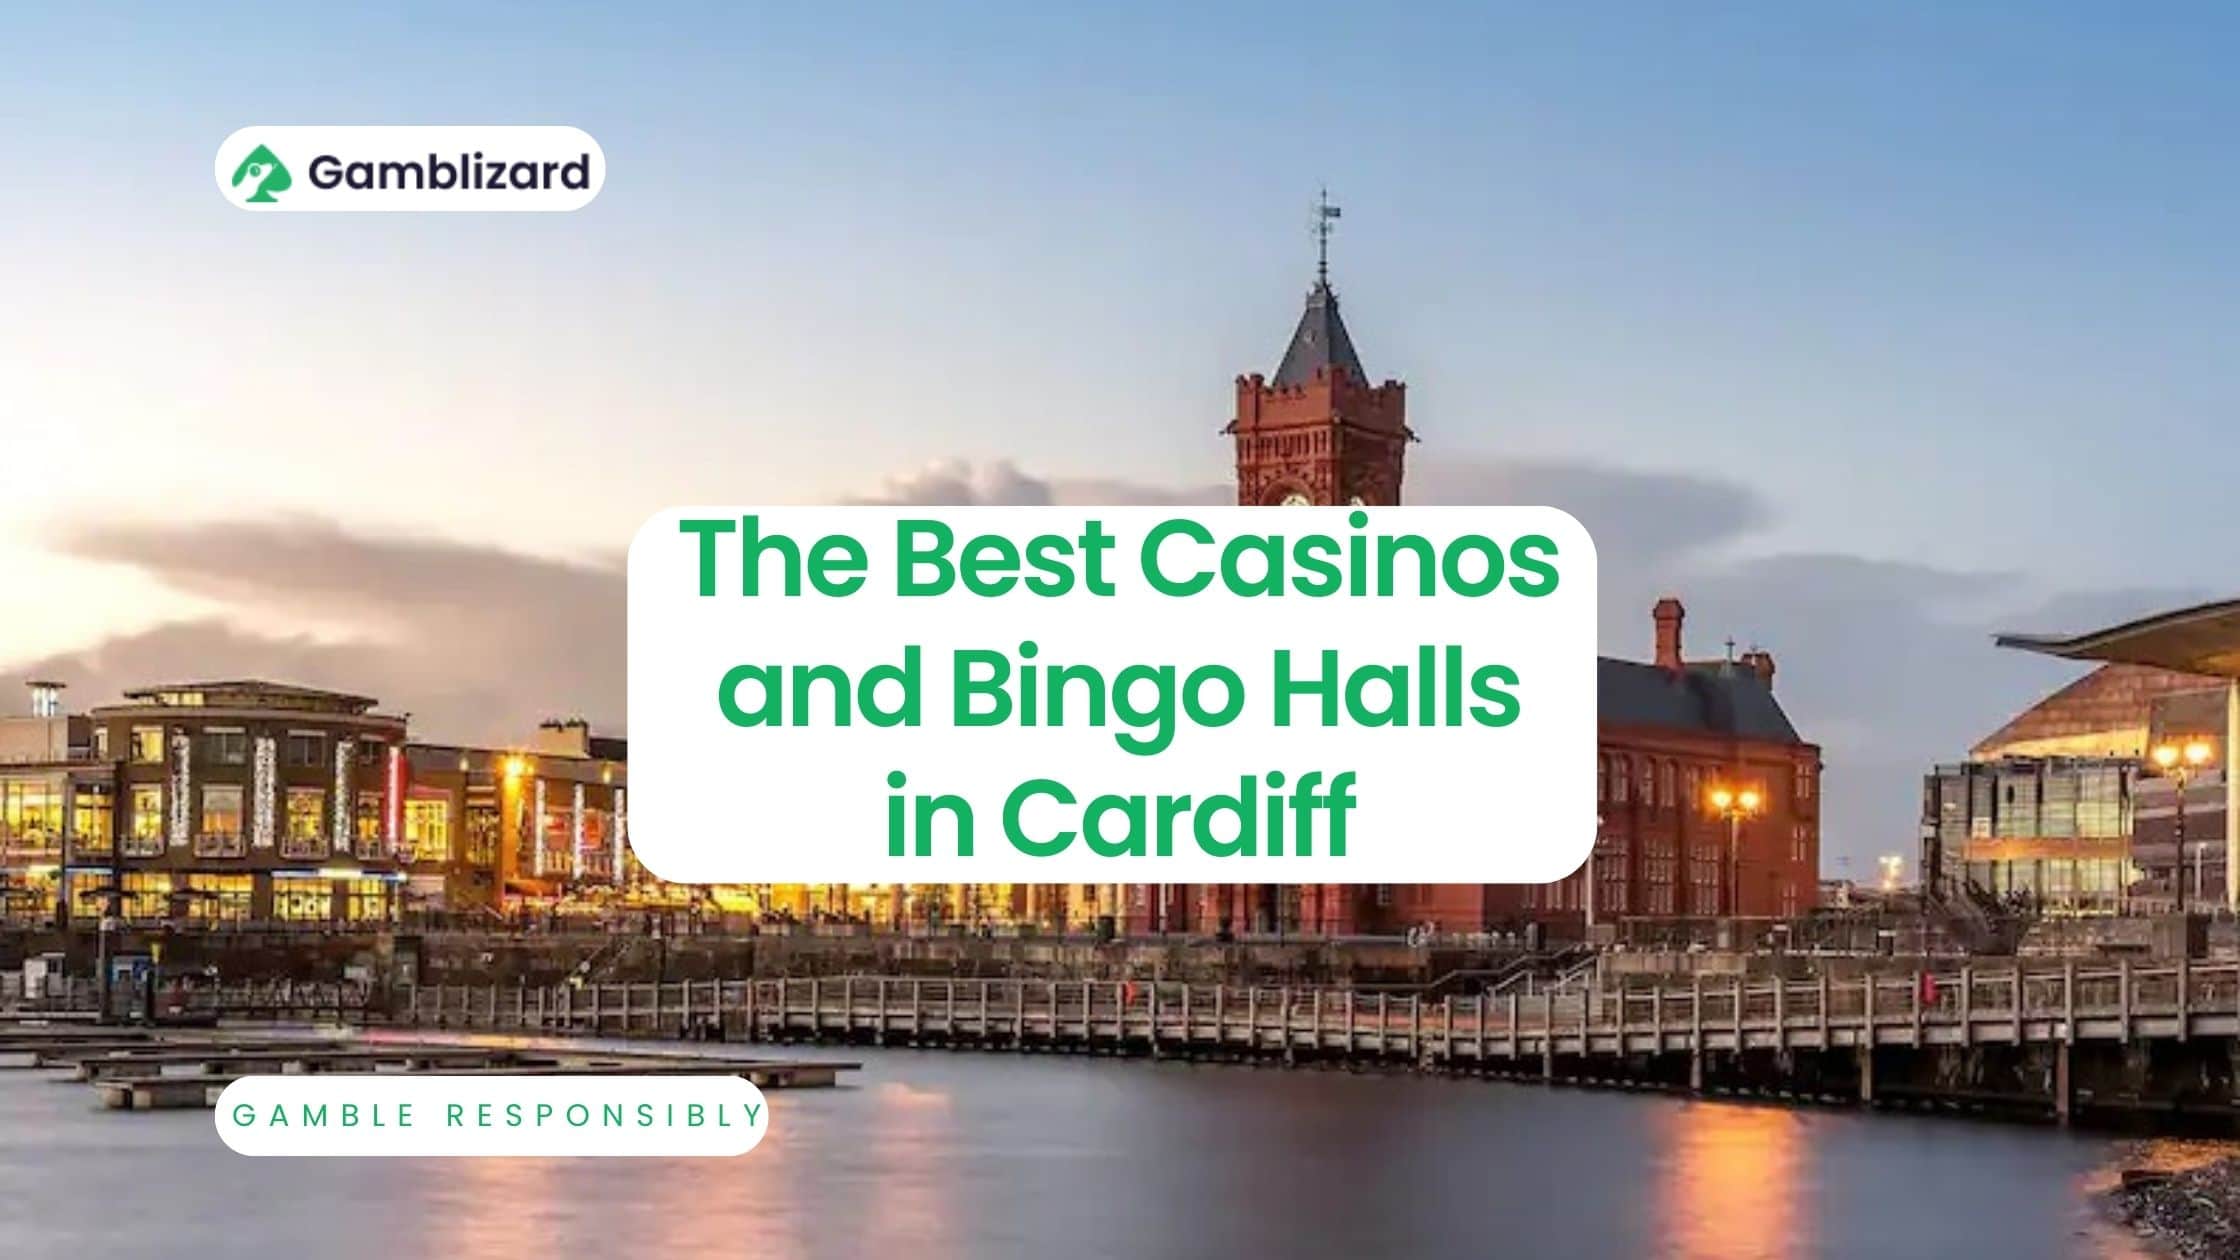 Casinos and bingo halls in Cardiff